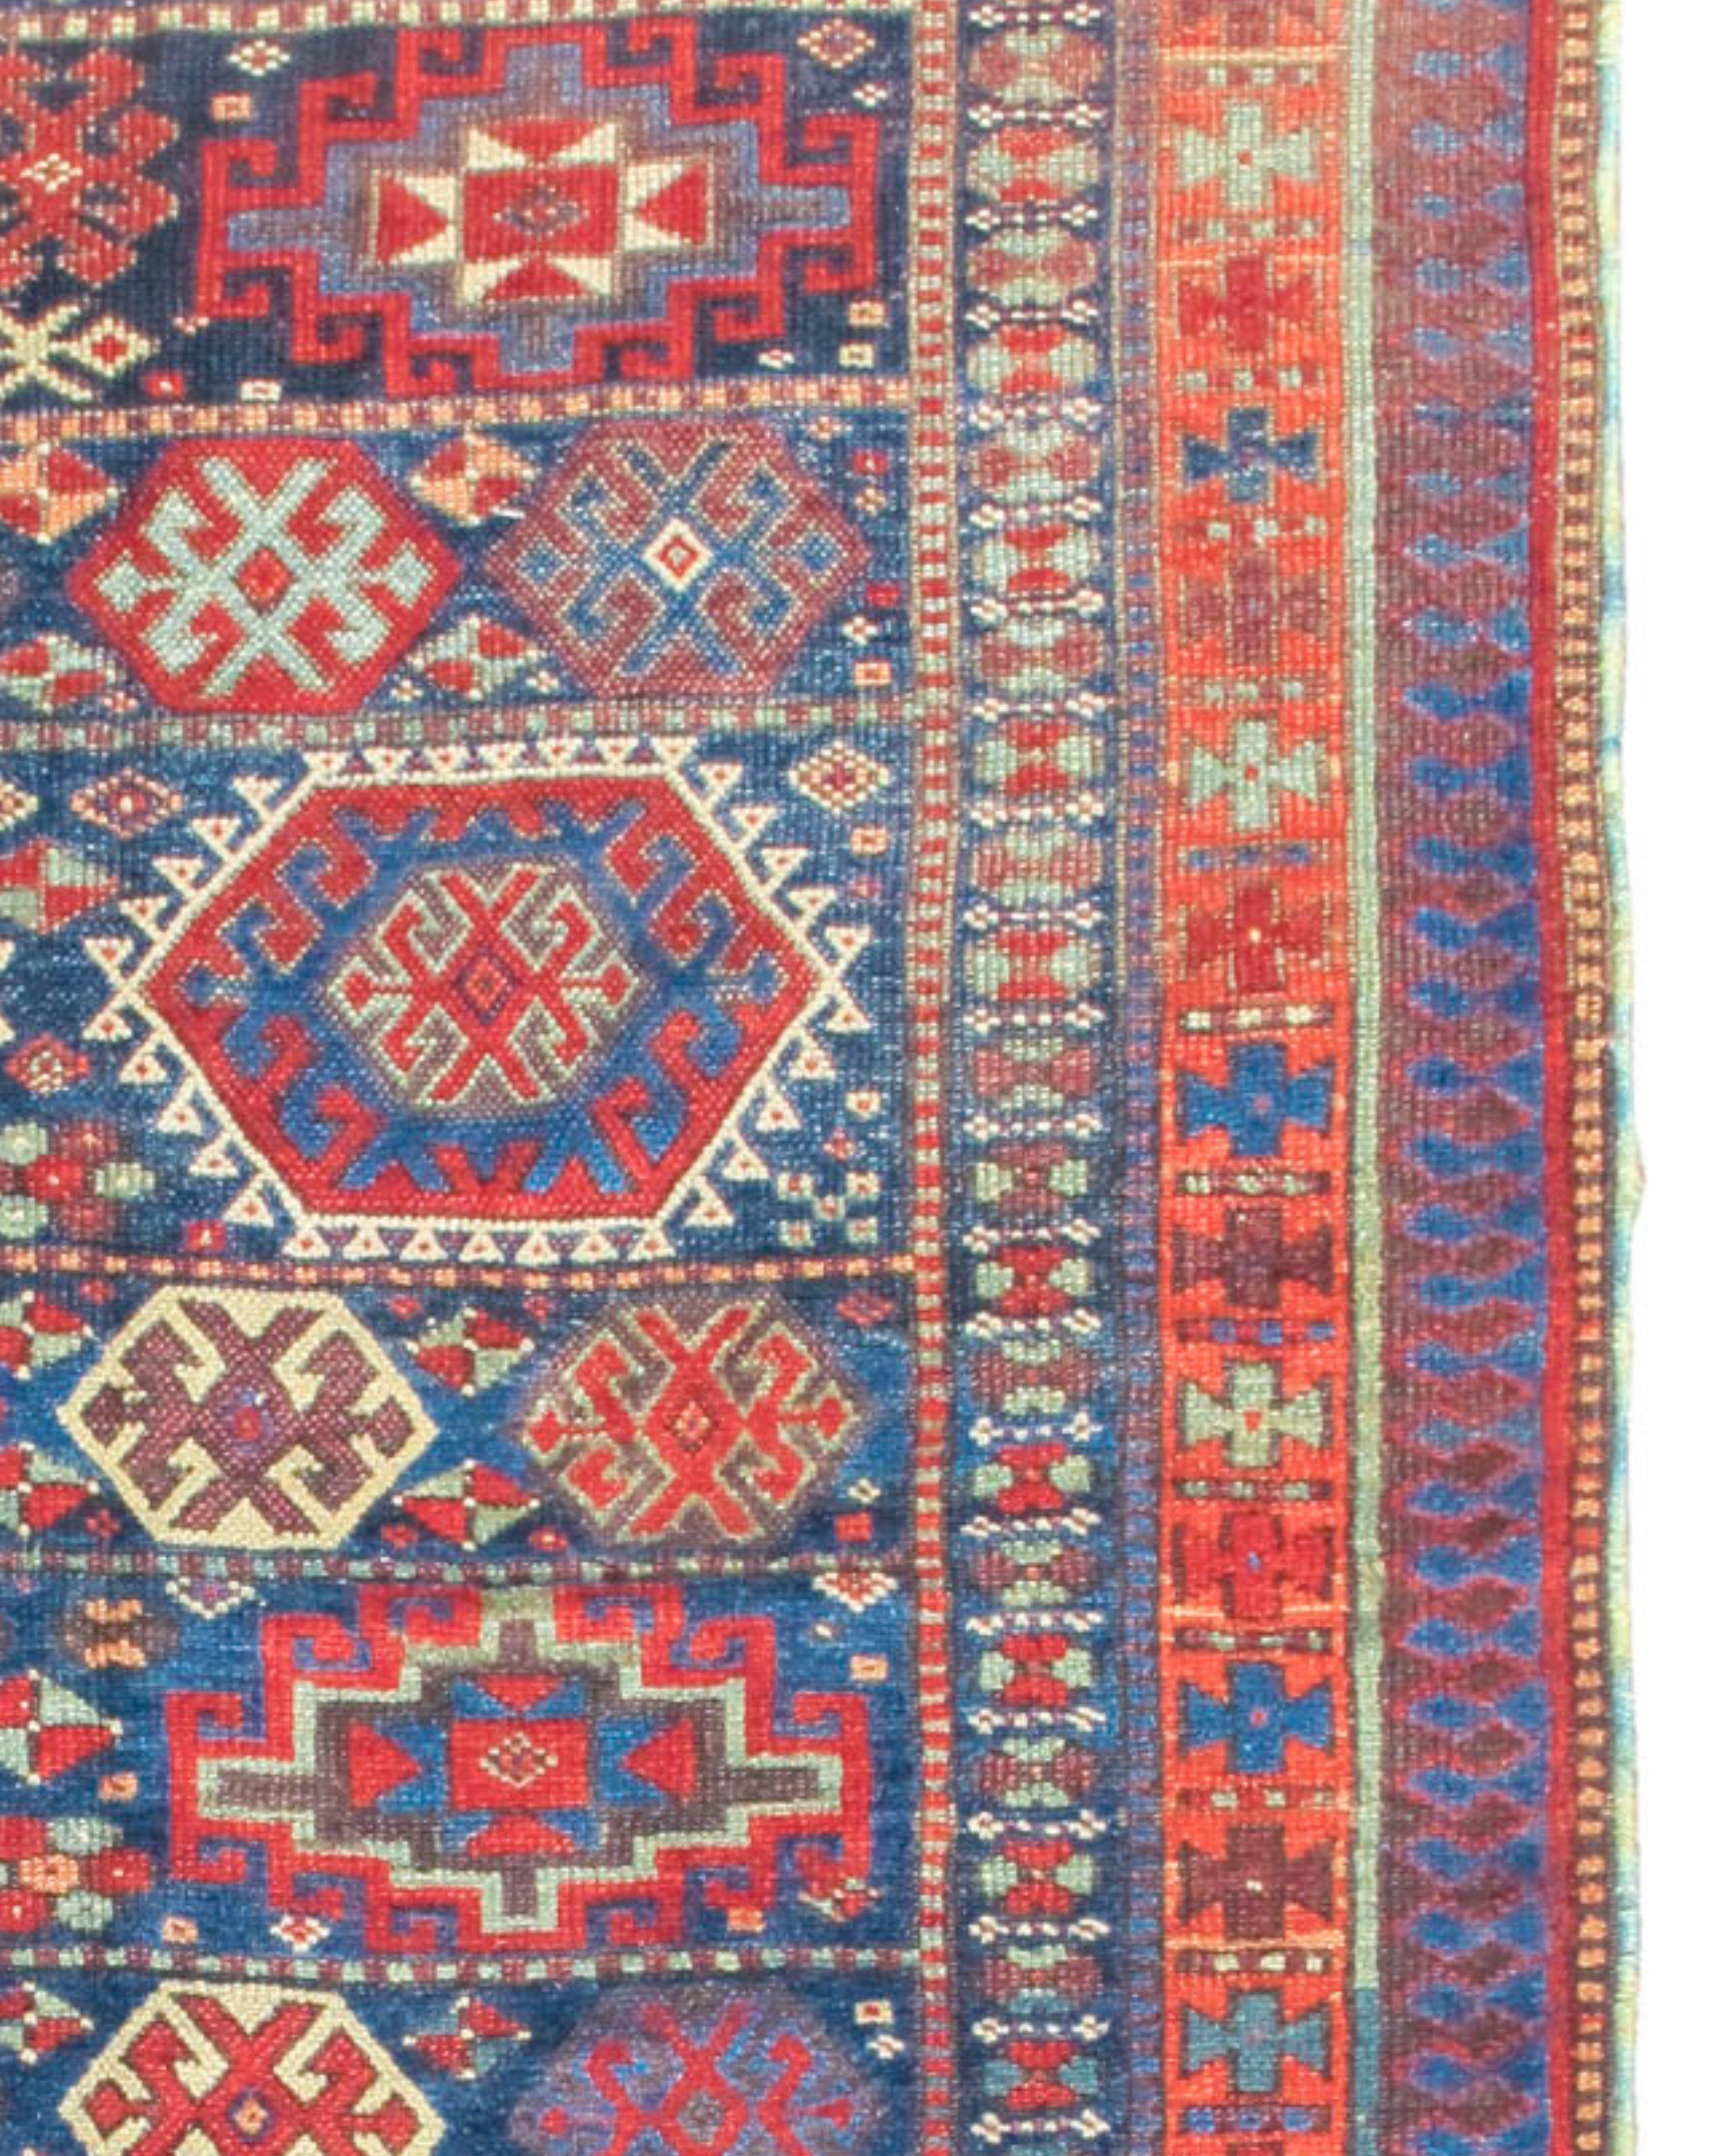 Antique Persian Sanjabi Kurd Rug, Late 19th Century

Additional Information:
Dimensions: 7'11